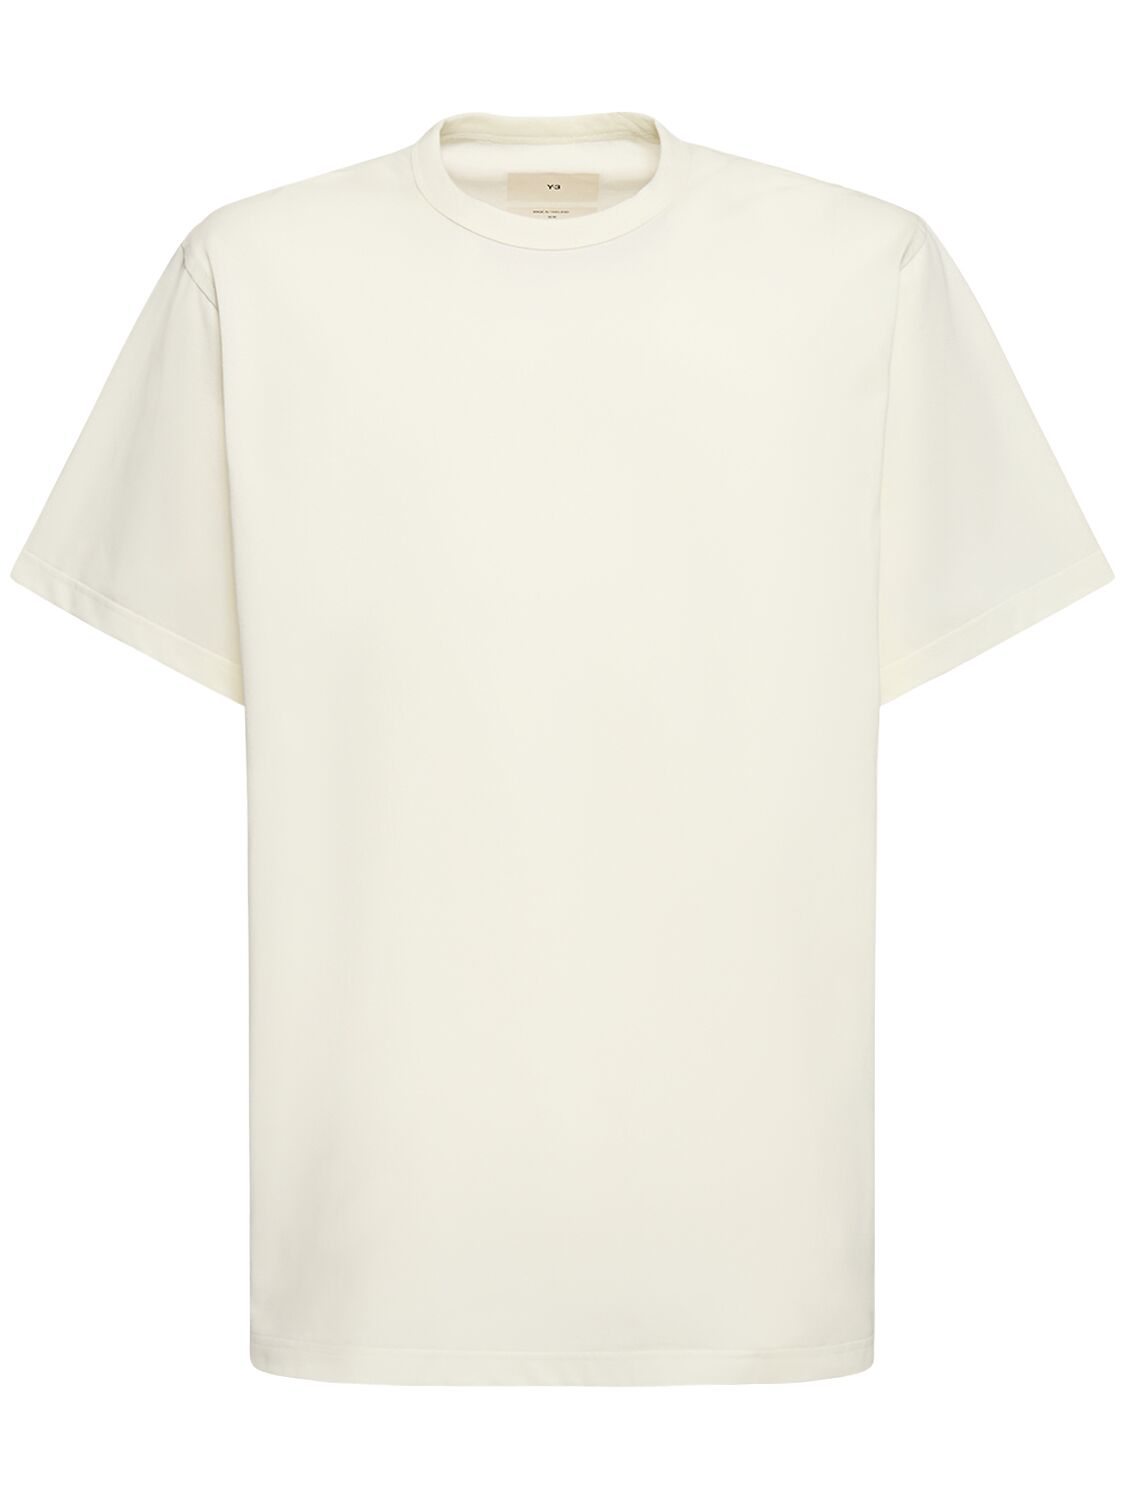 Image of Premium Cotton Short Sleeve T-shirt